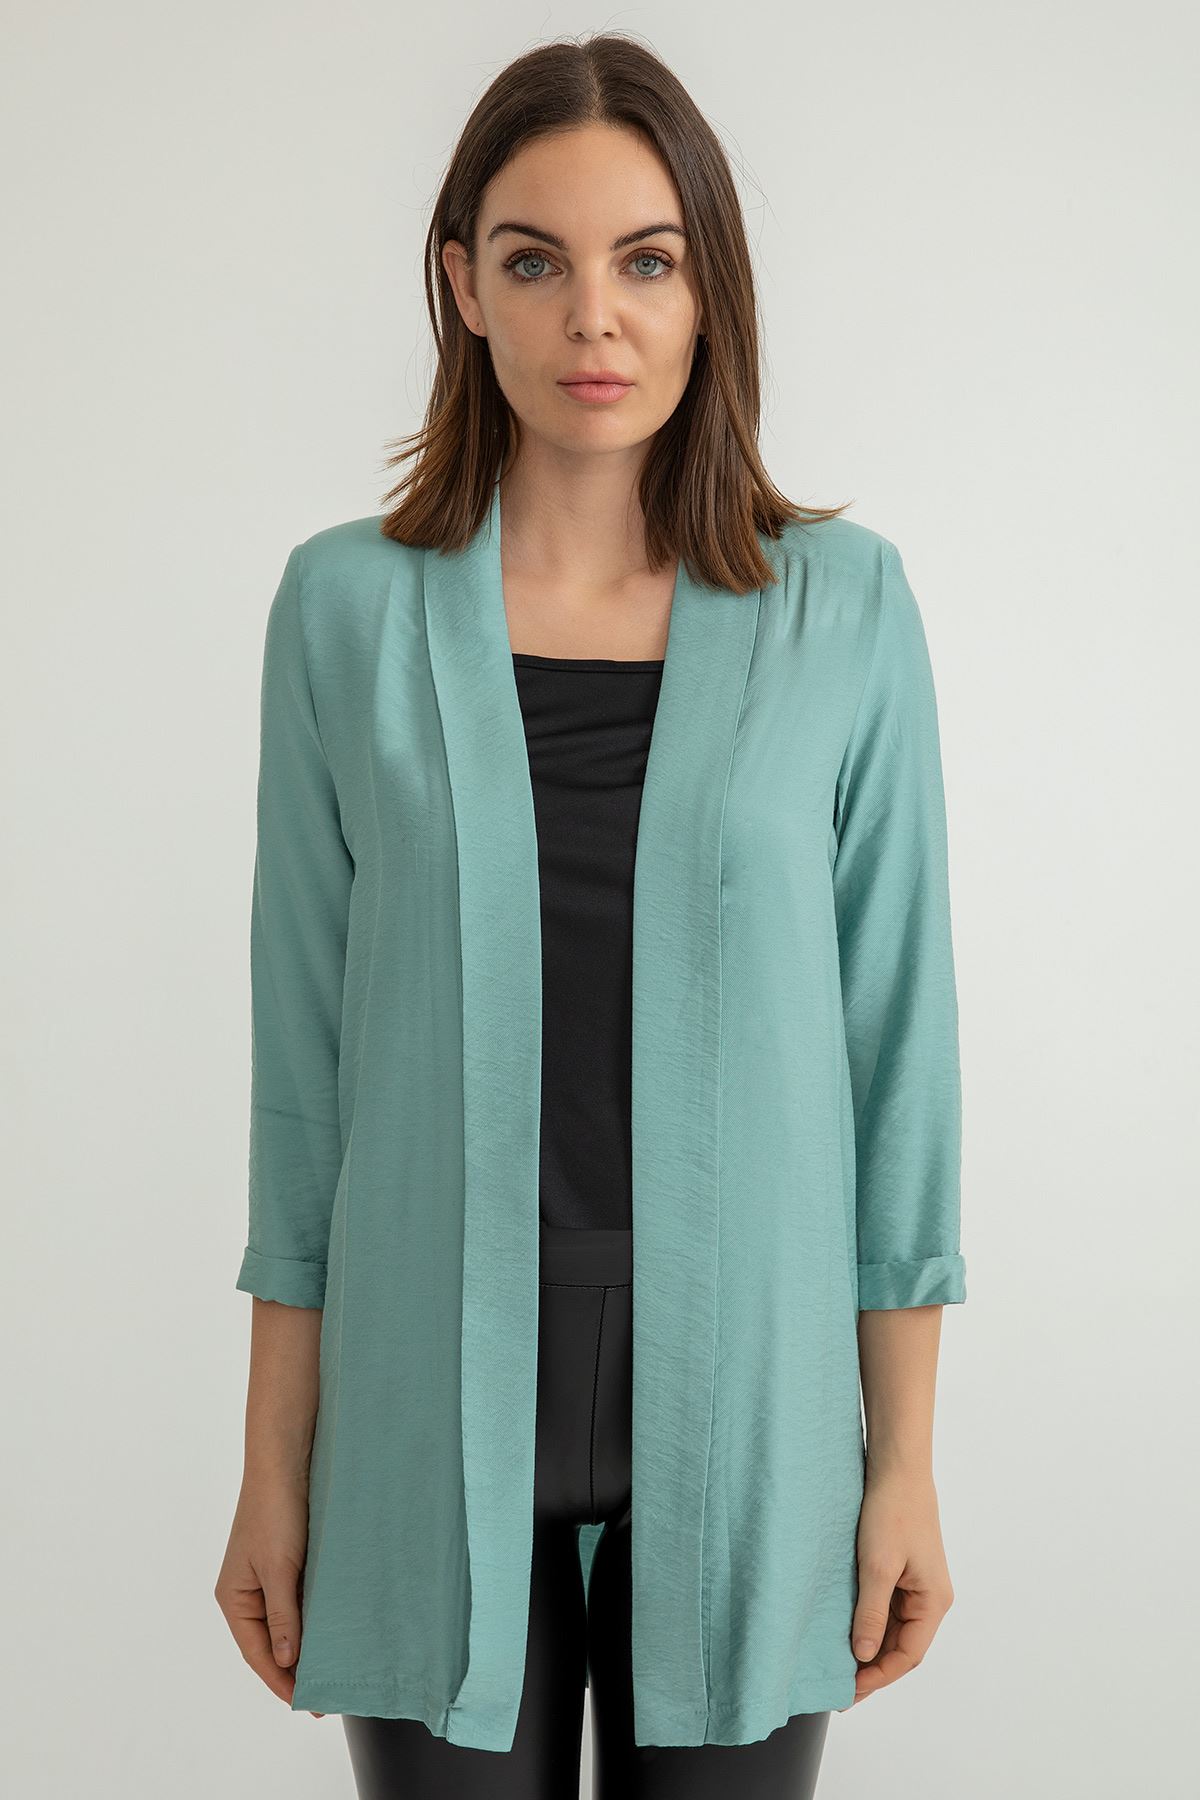 Aerobin Fabric Long Sleeve Shawl Collar Below Hip Comfy Women Jacket - Mint